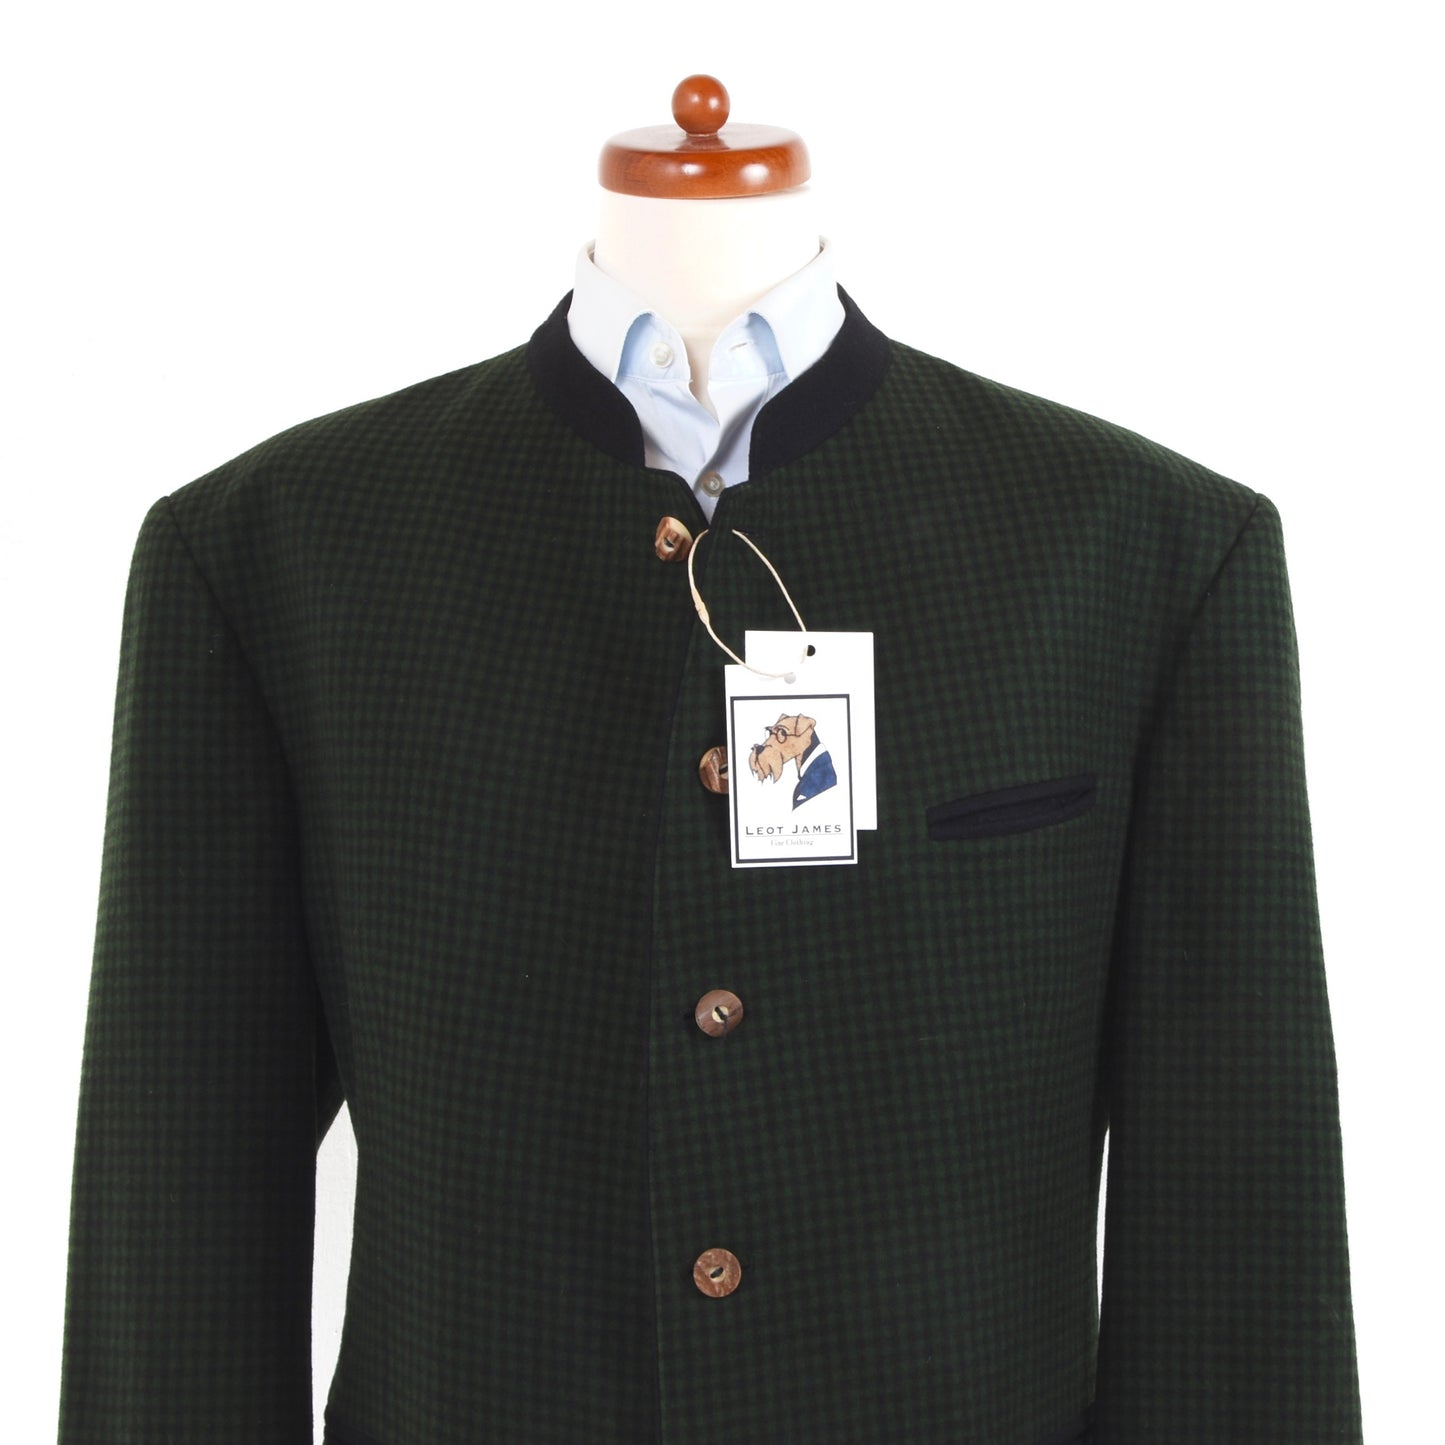 Seidl Wool Janker/Jacket Size 56 - Rosegger Green/Black